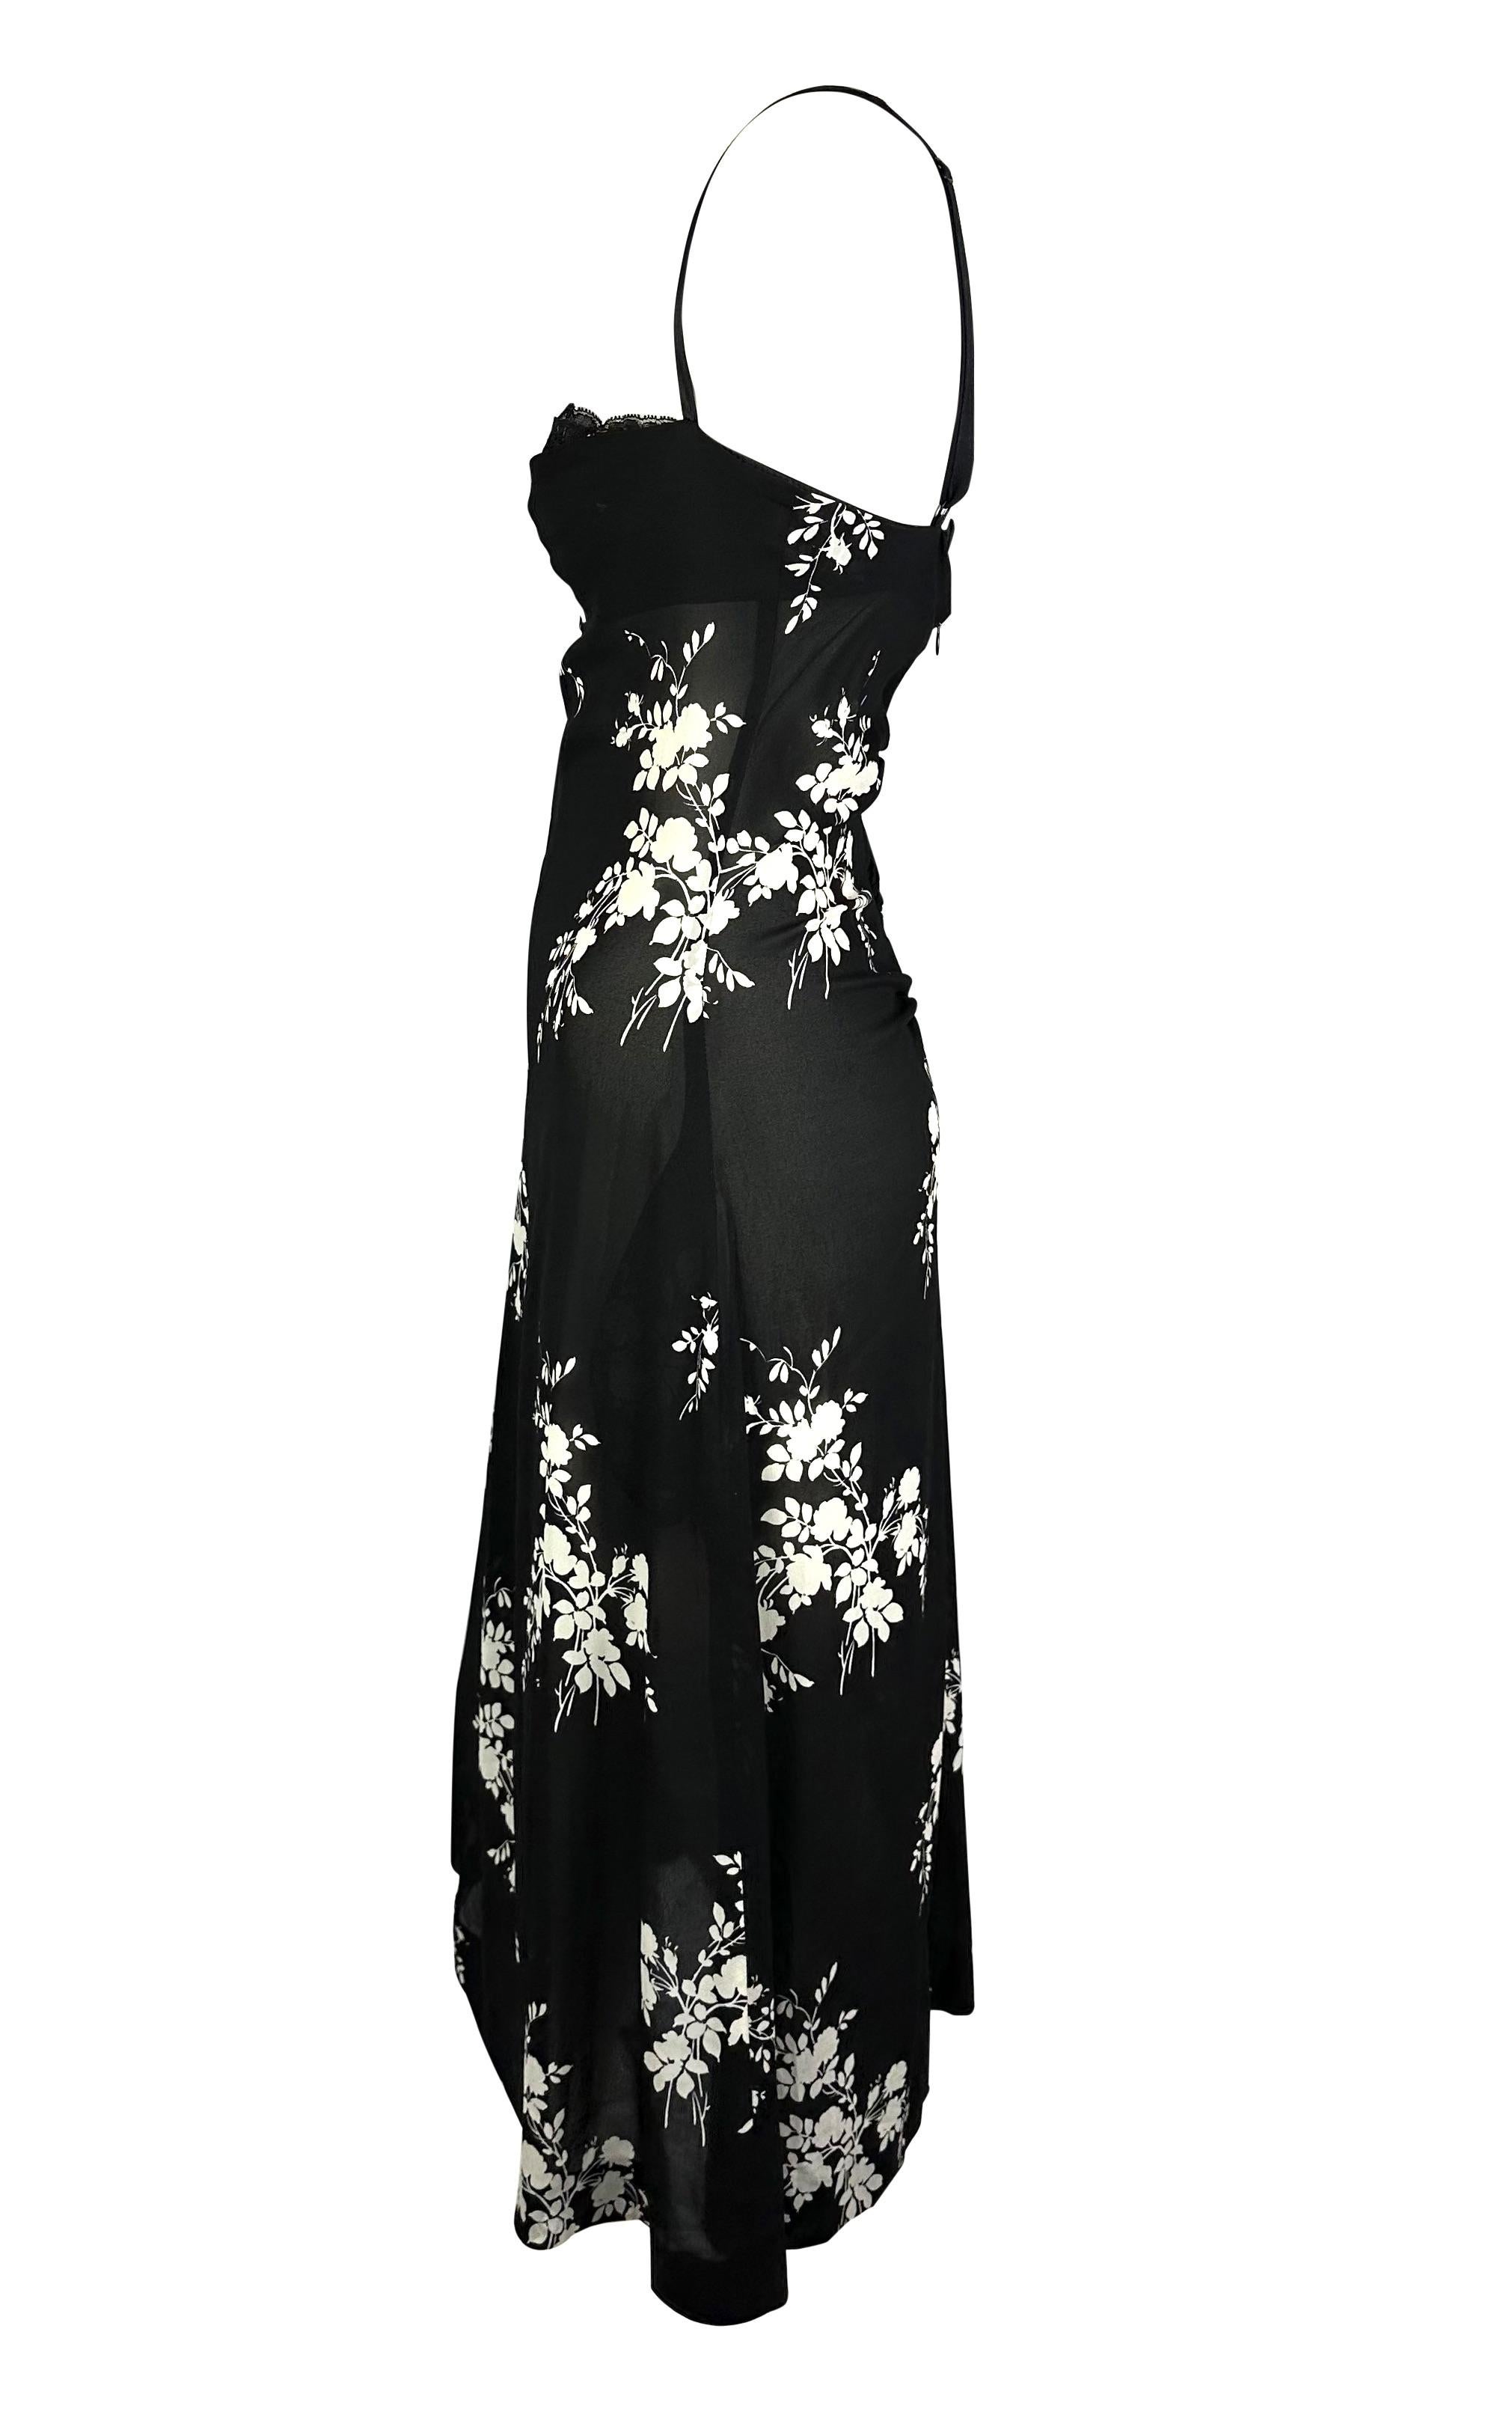 S/S 2002 Dolce & Gabbana Runway Sheer Black Stretch Silk Floral Bustier Dress 3